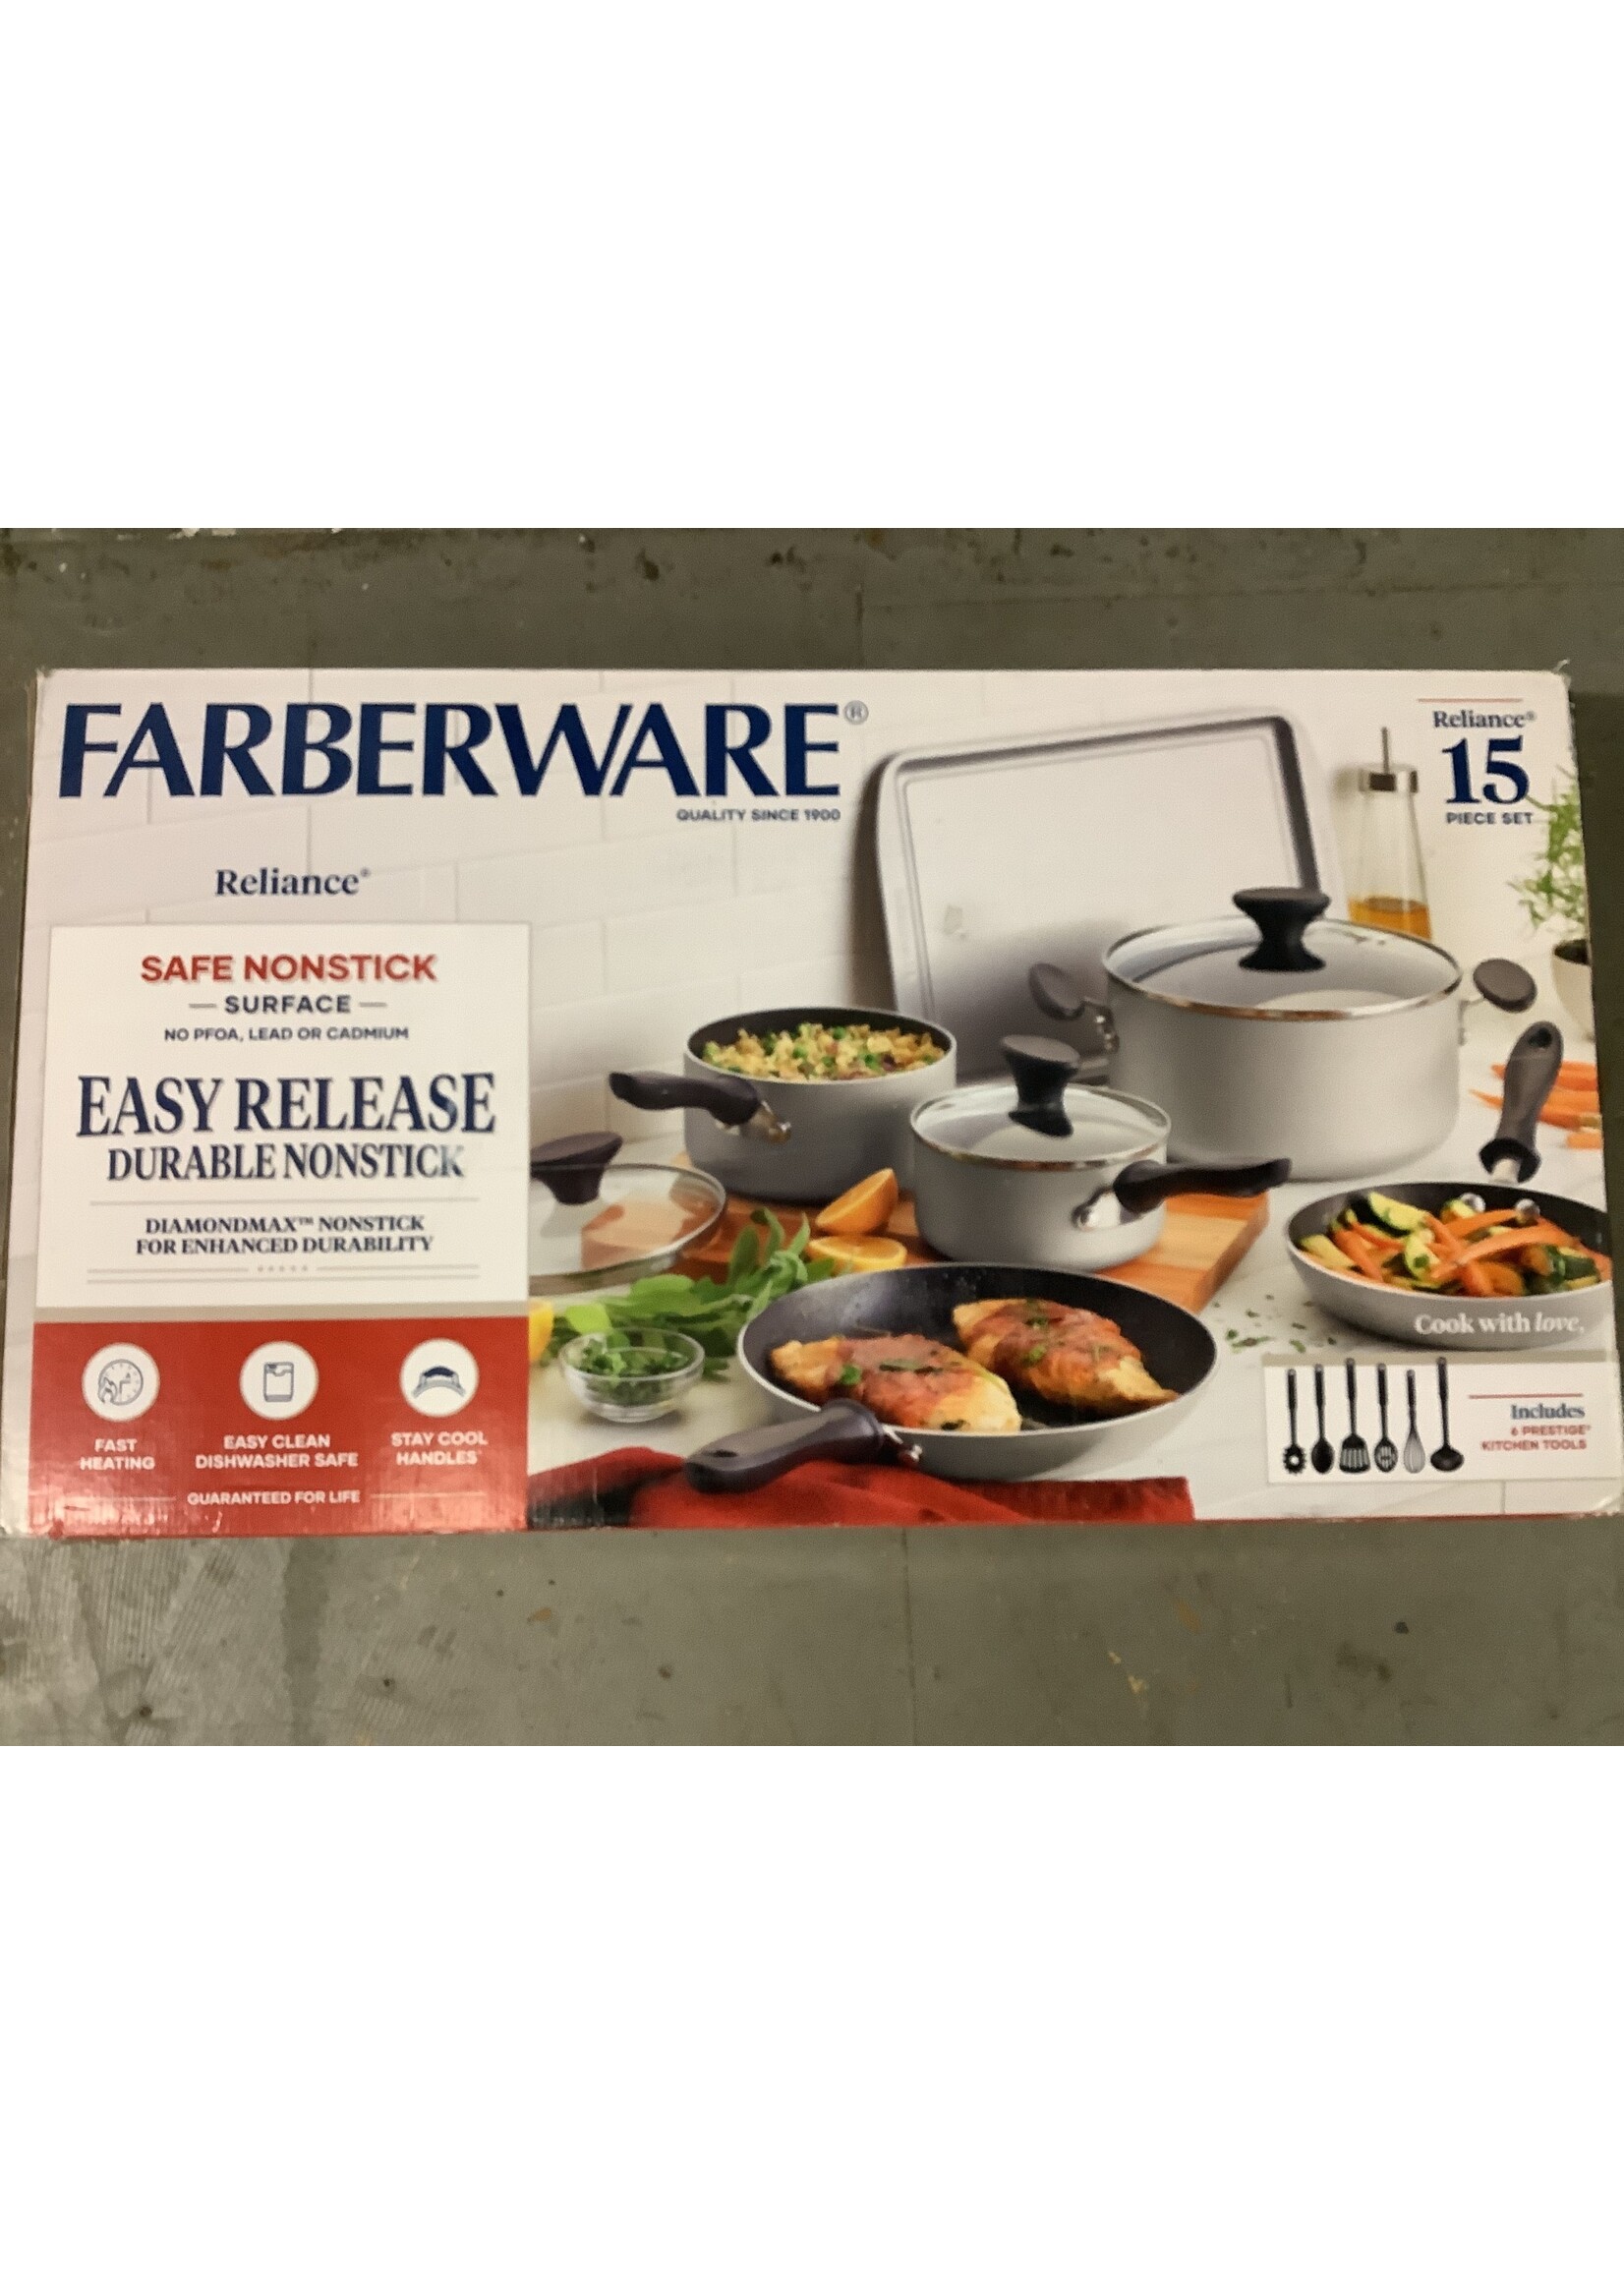 Farberware Reliance 15pc Aluminum Nonstick Cookware Set with Prestige Tools Silver